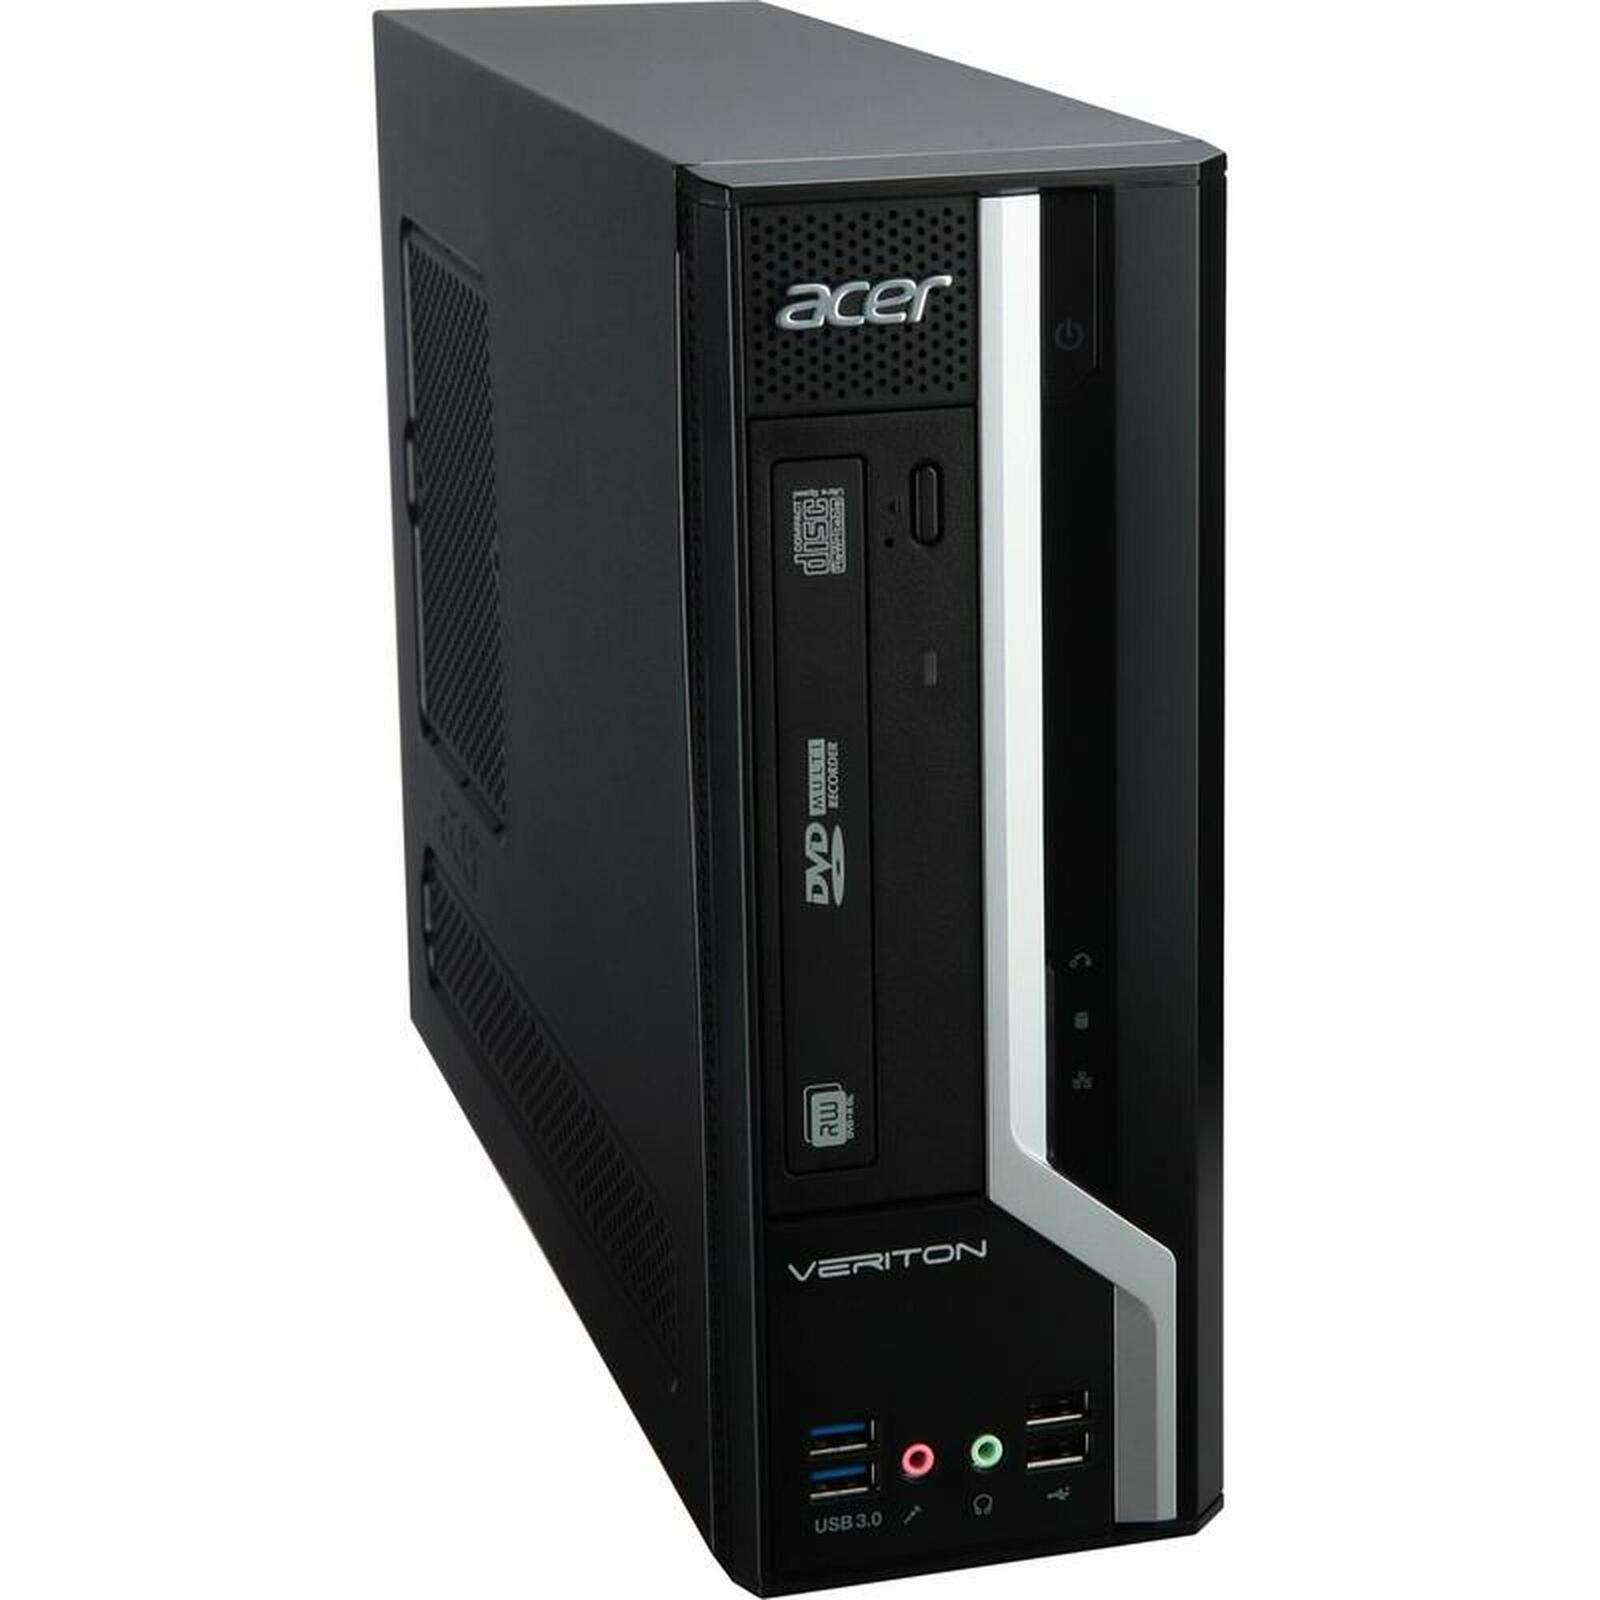 Acer Vertion X6630G SFF Intel i7 4790 3.60Ghz 16GB RAM 500GB HDD NO OS Full Size Image